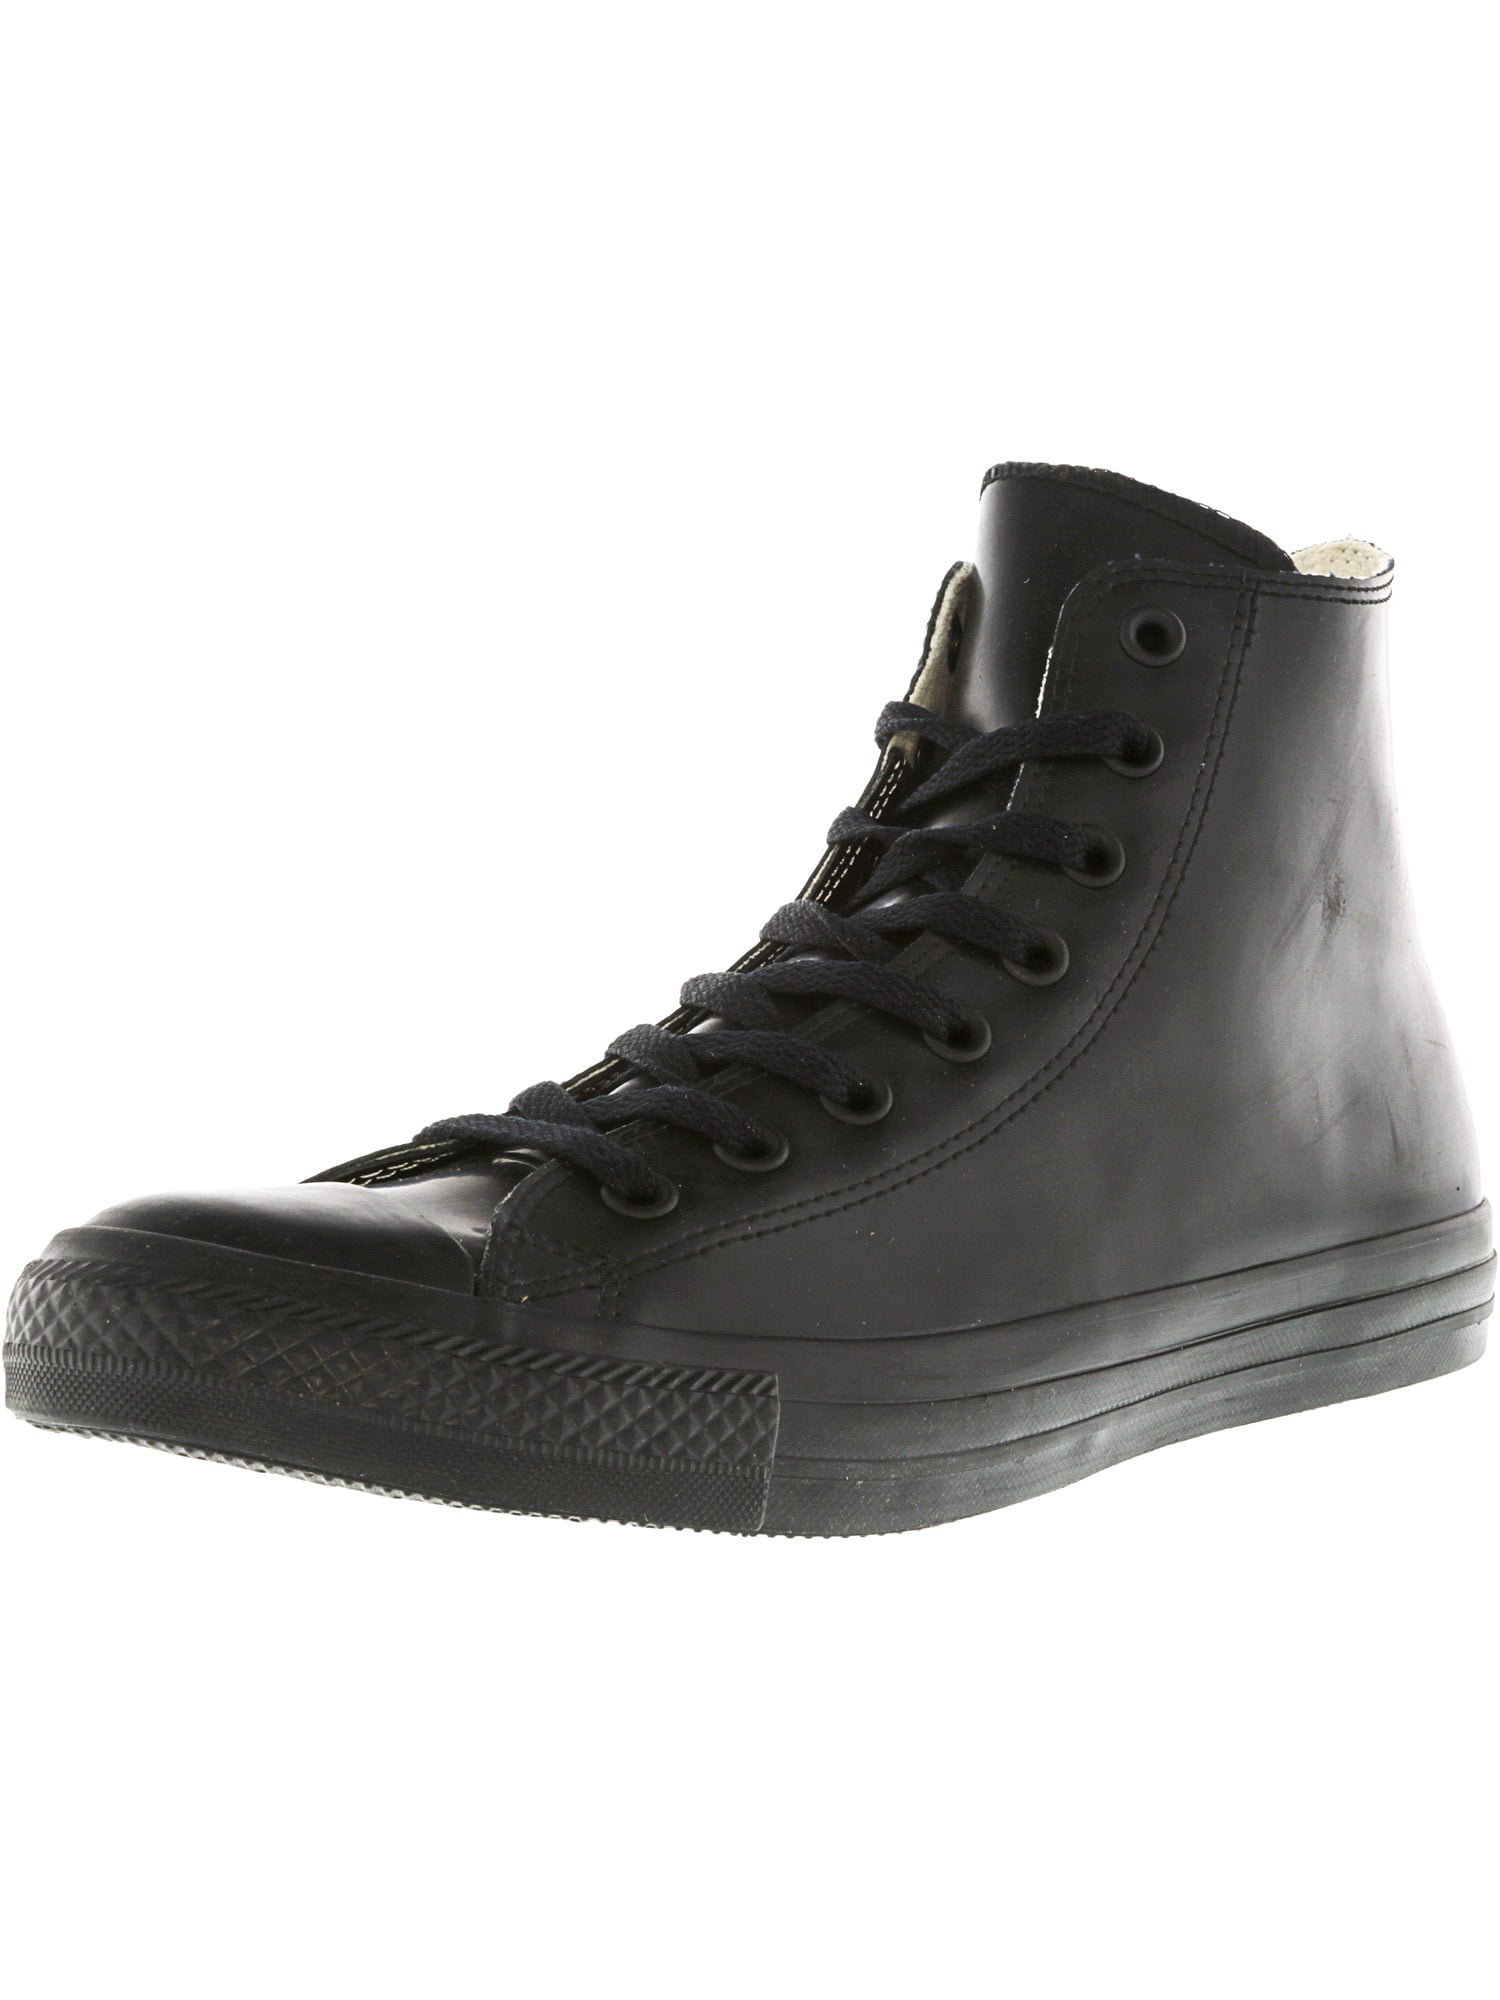 Converse Rubber Boot Black High-Top Shoe - 12M / 10M - Walmart.com